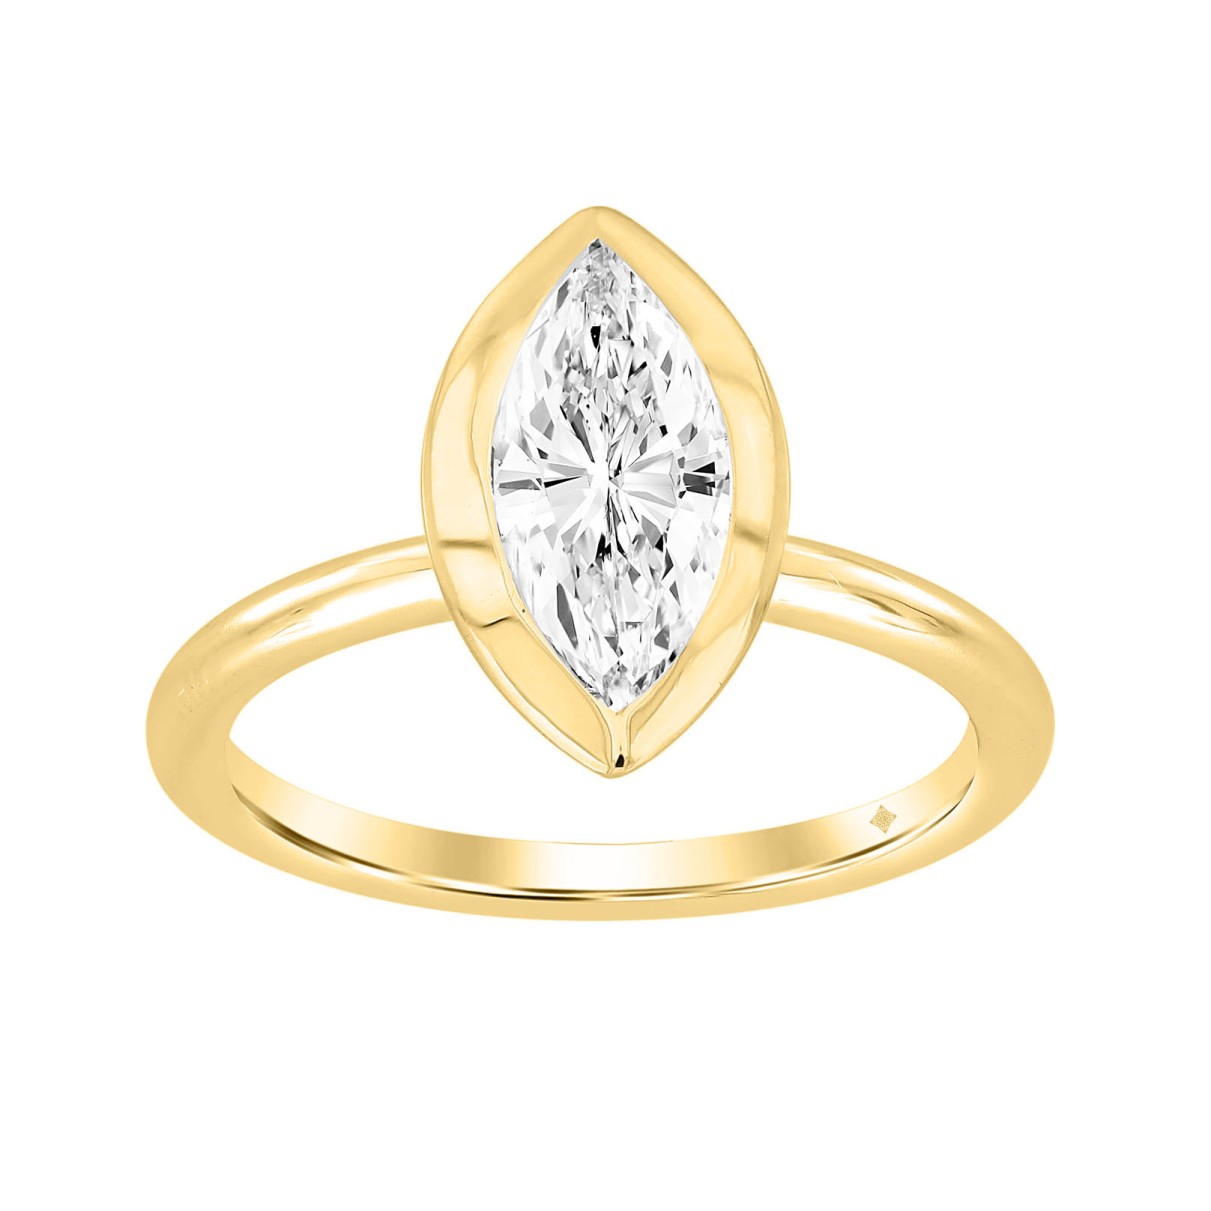 LADIES RING 2CT MARQUISE DIAMOND 14K YELLOW GOLD (CENTER STONE MARQUISE DIAMOND 2CT )